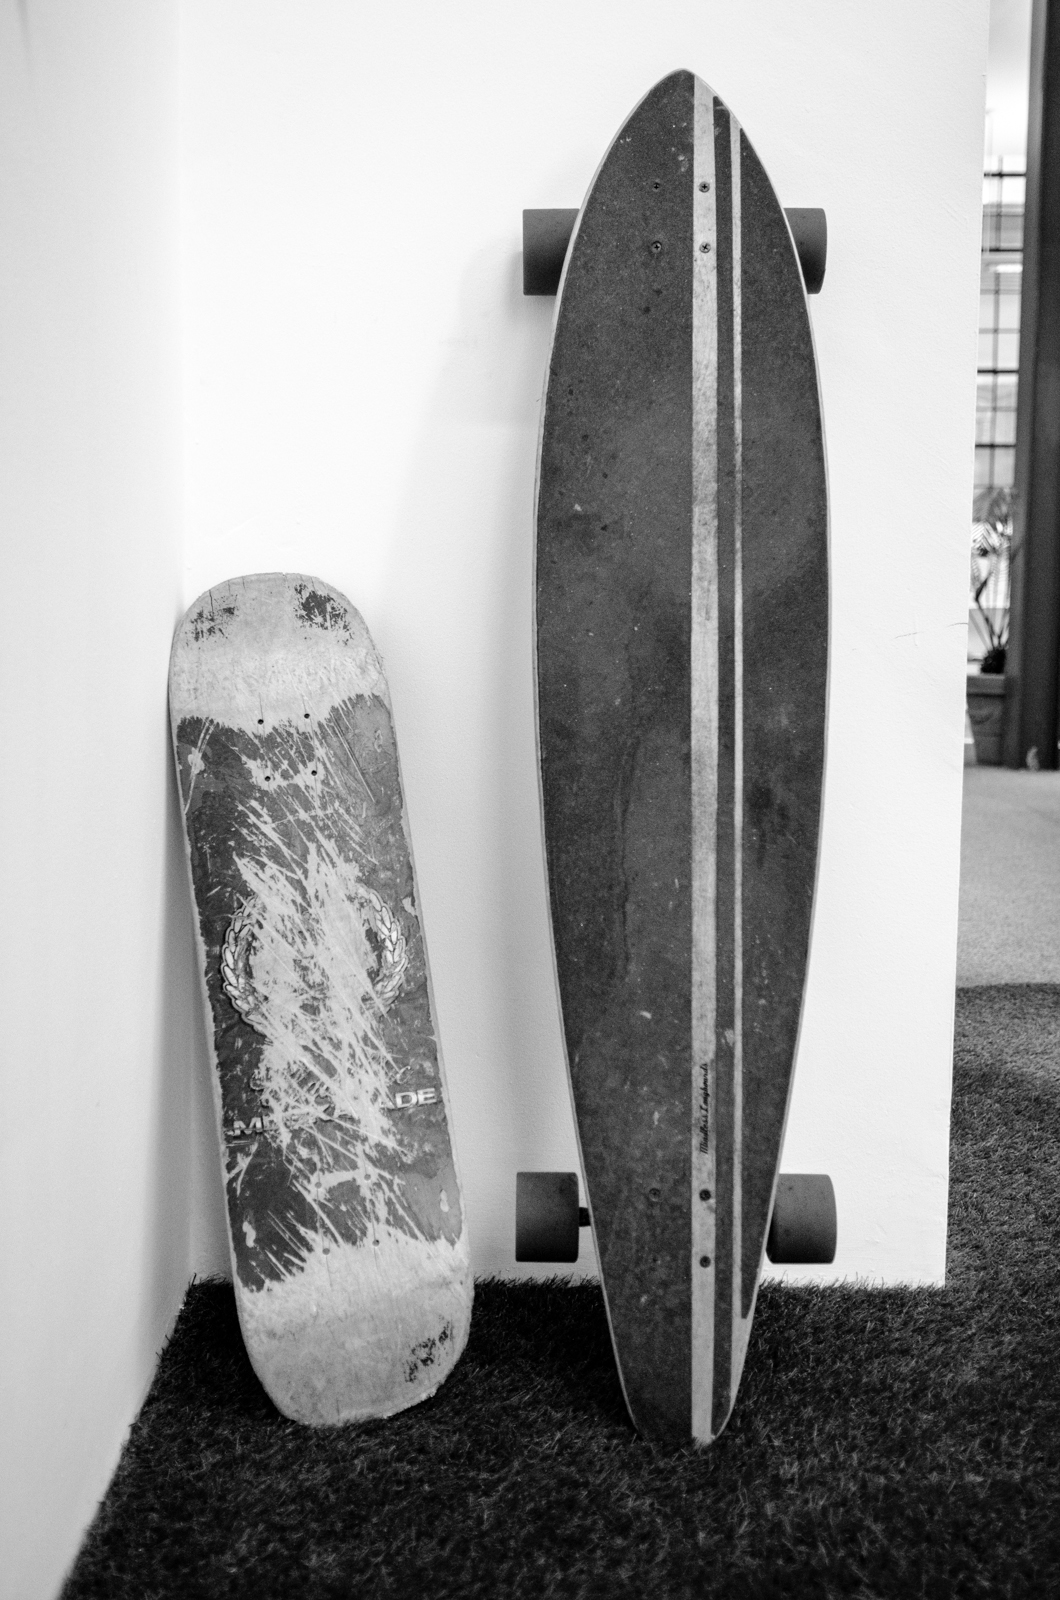 a skateboard sits next to a large skateboard